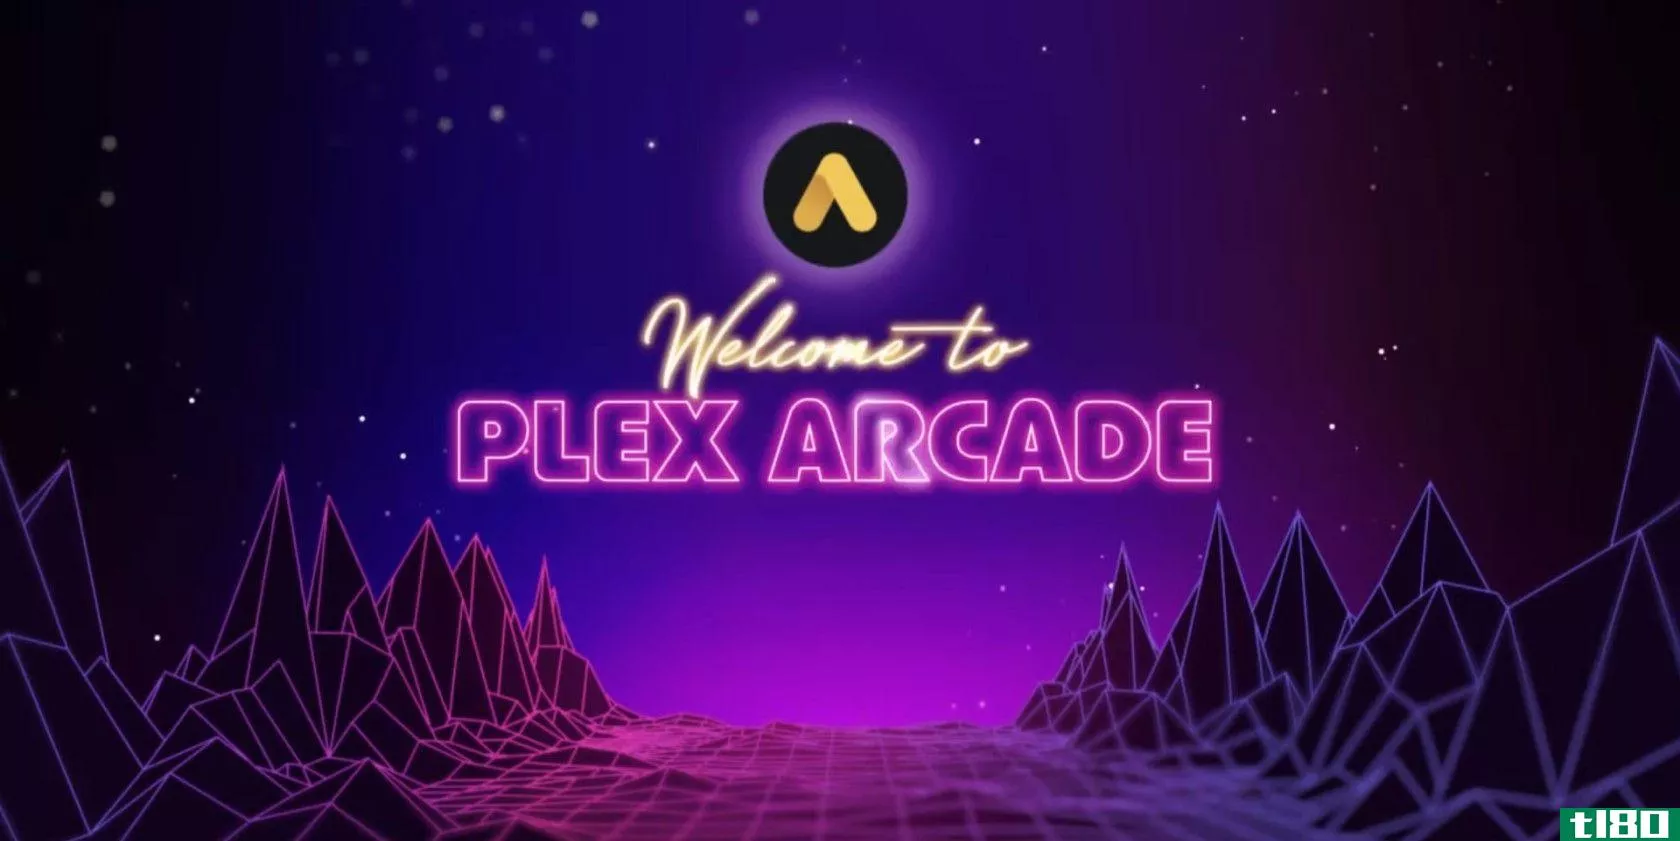 Plex Arcade subscription